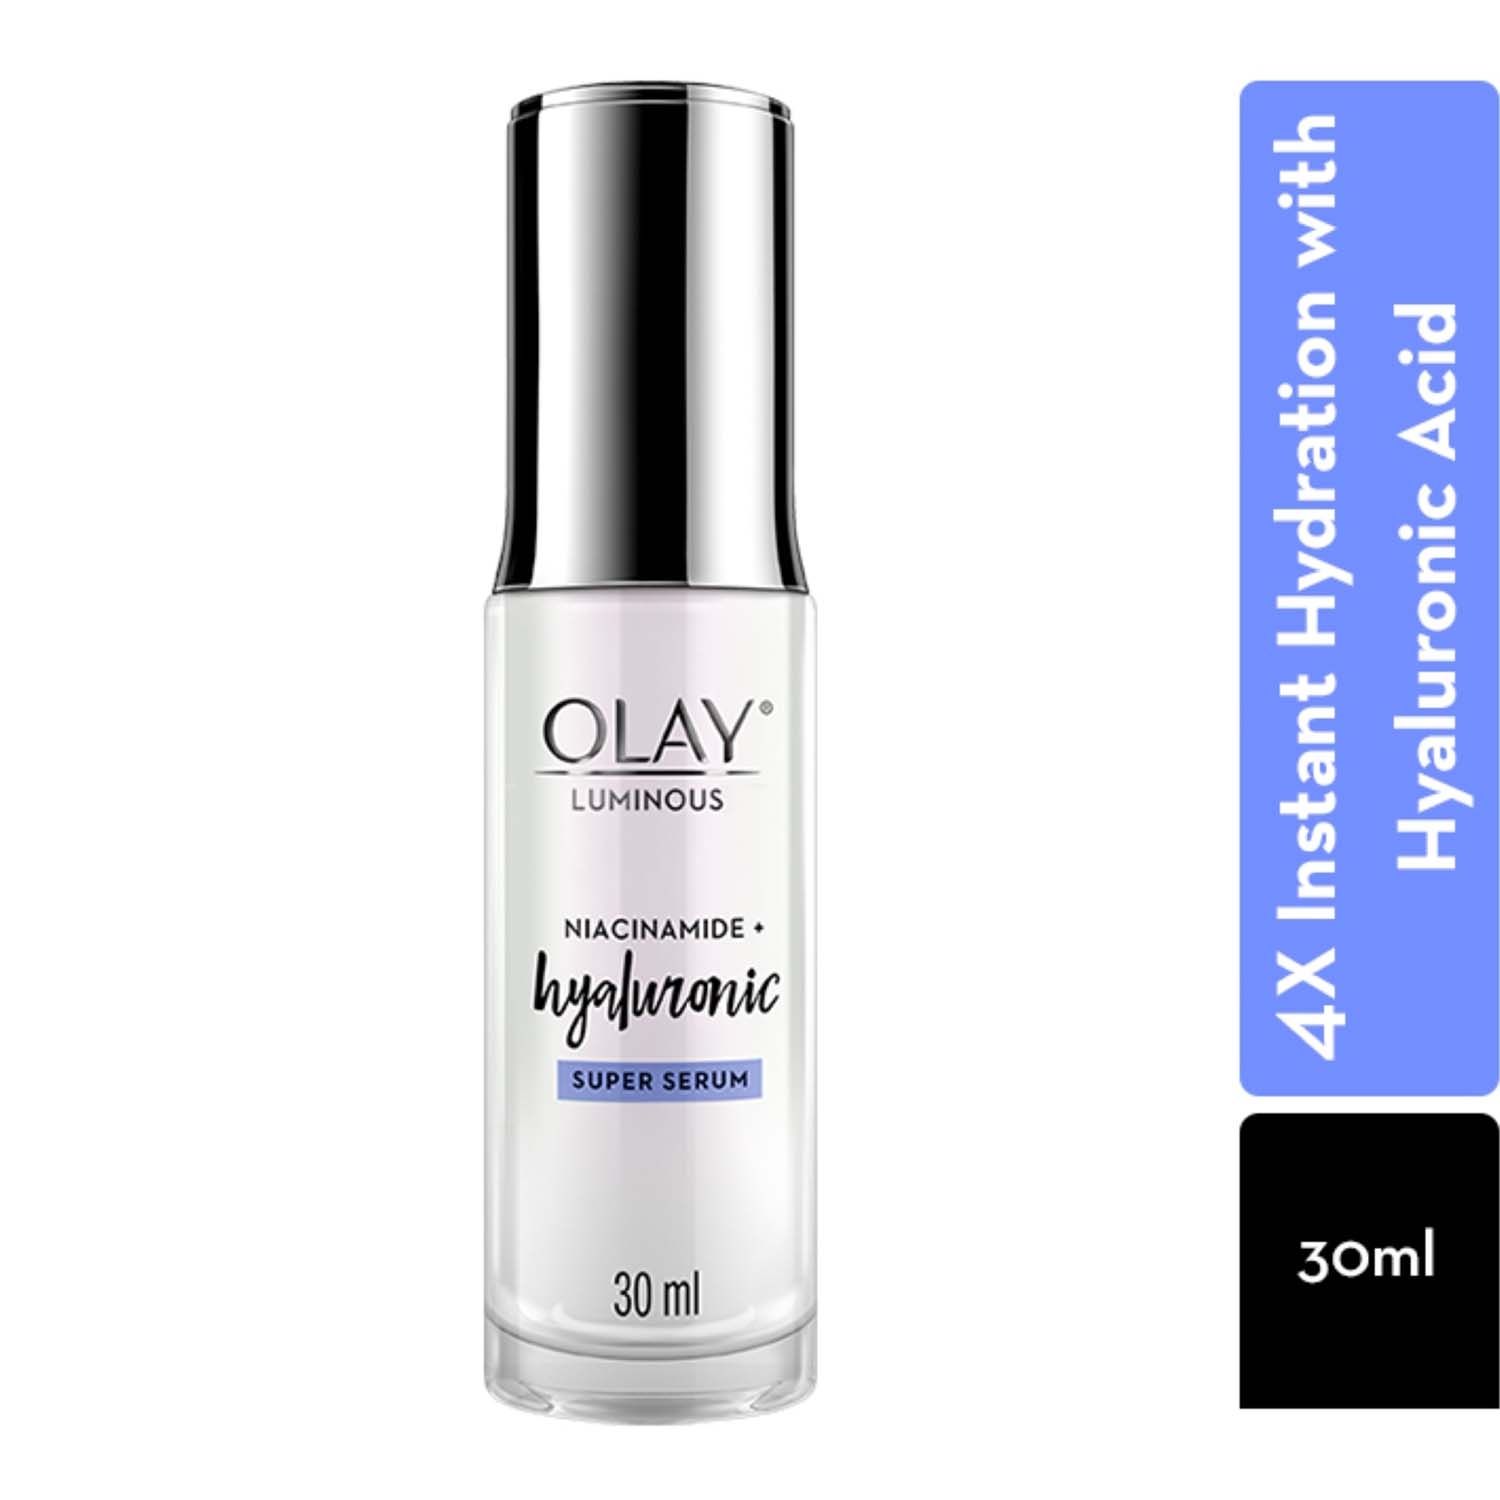 Olay | Olay Luminous Hyaluronic Acid Super Serum (30ml)